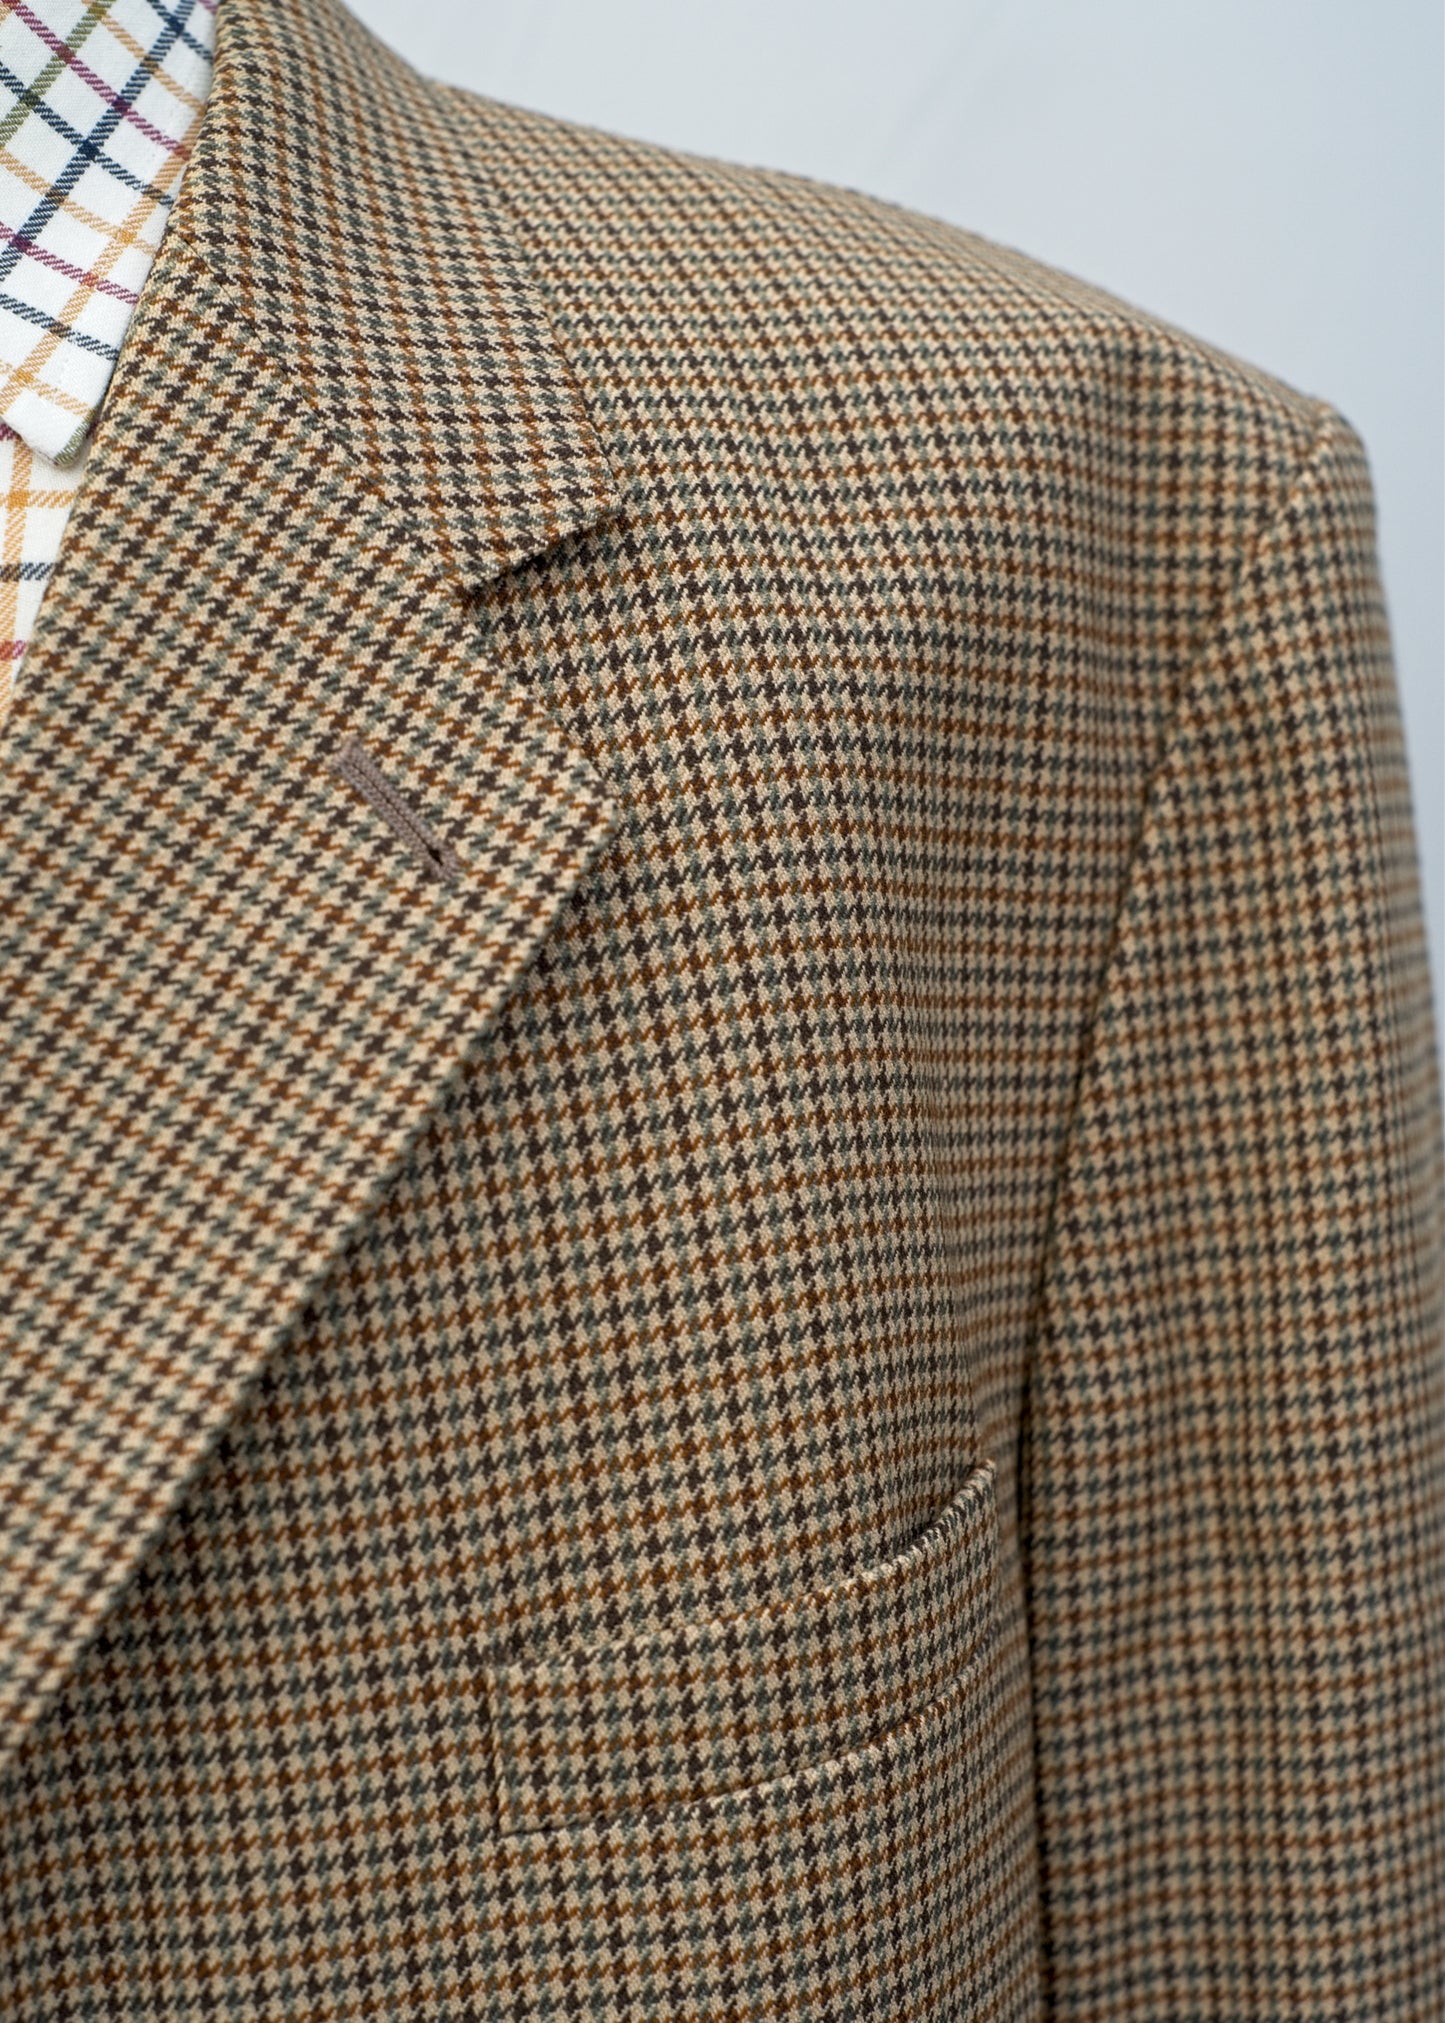 Men's Vintage David Little Houndstooth Tweed Jacket • 52